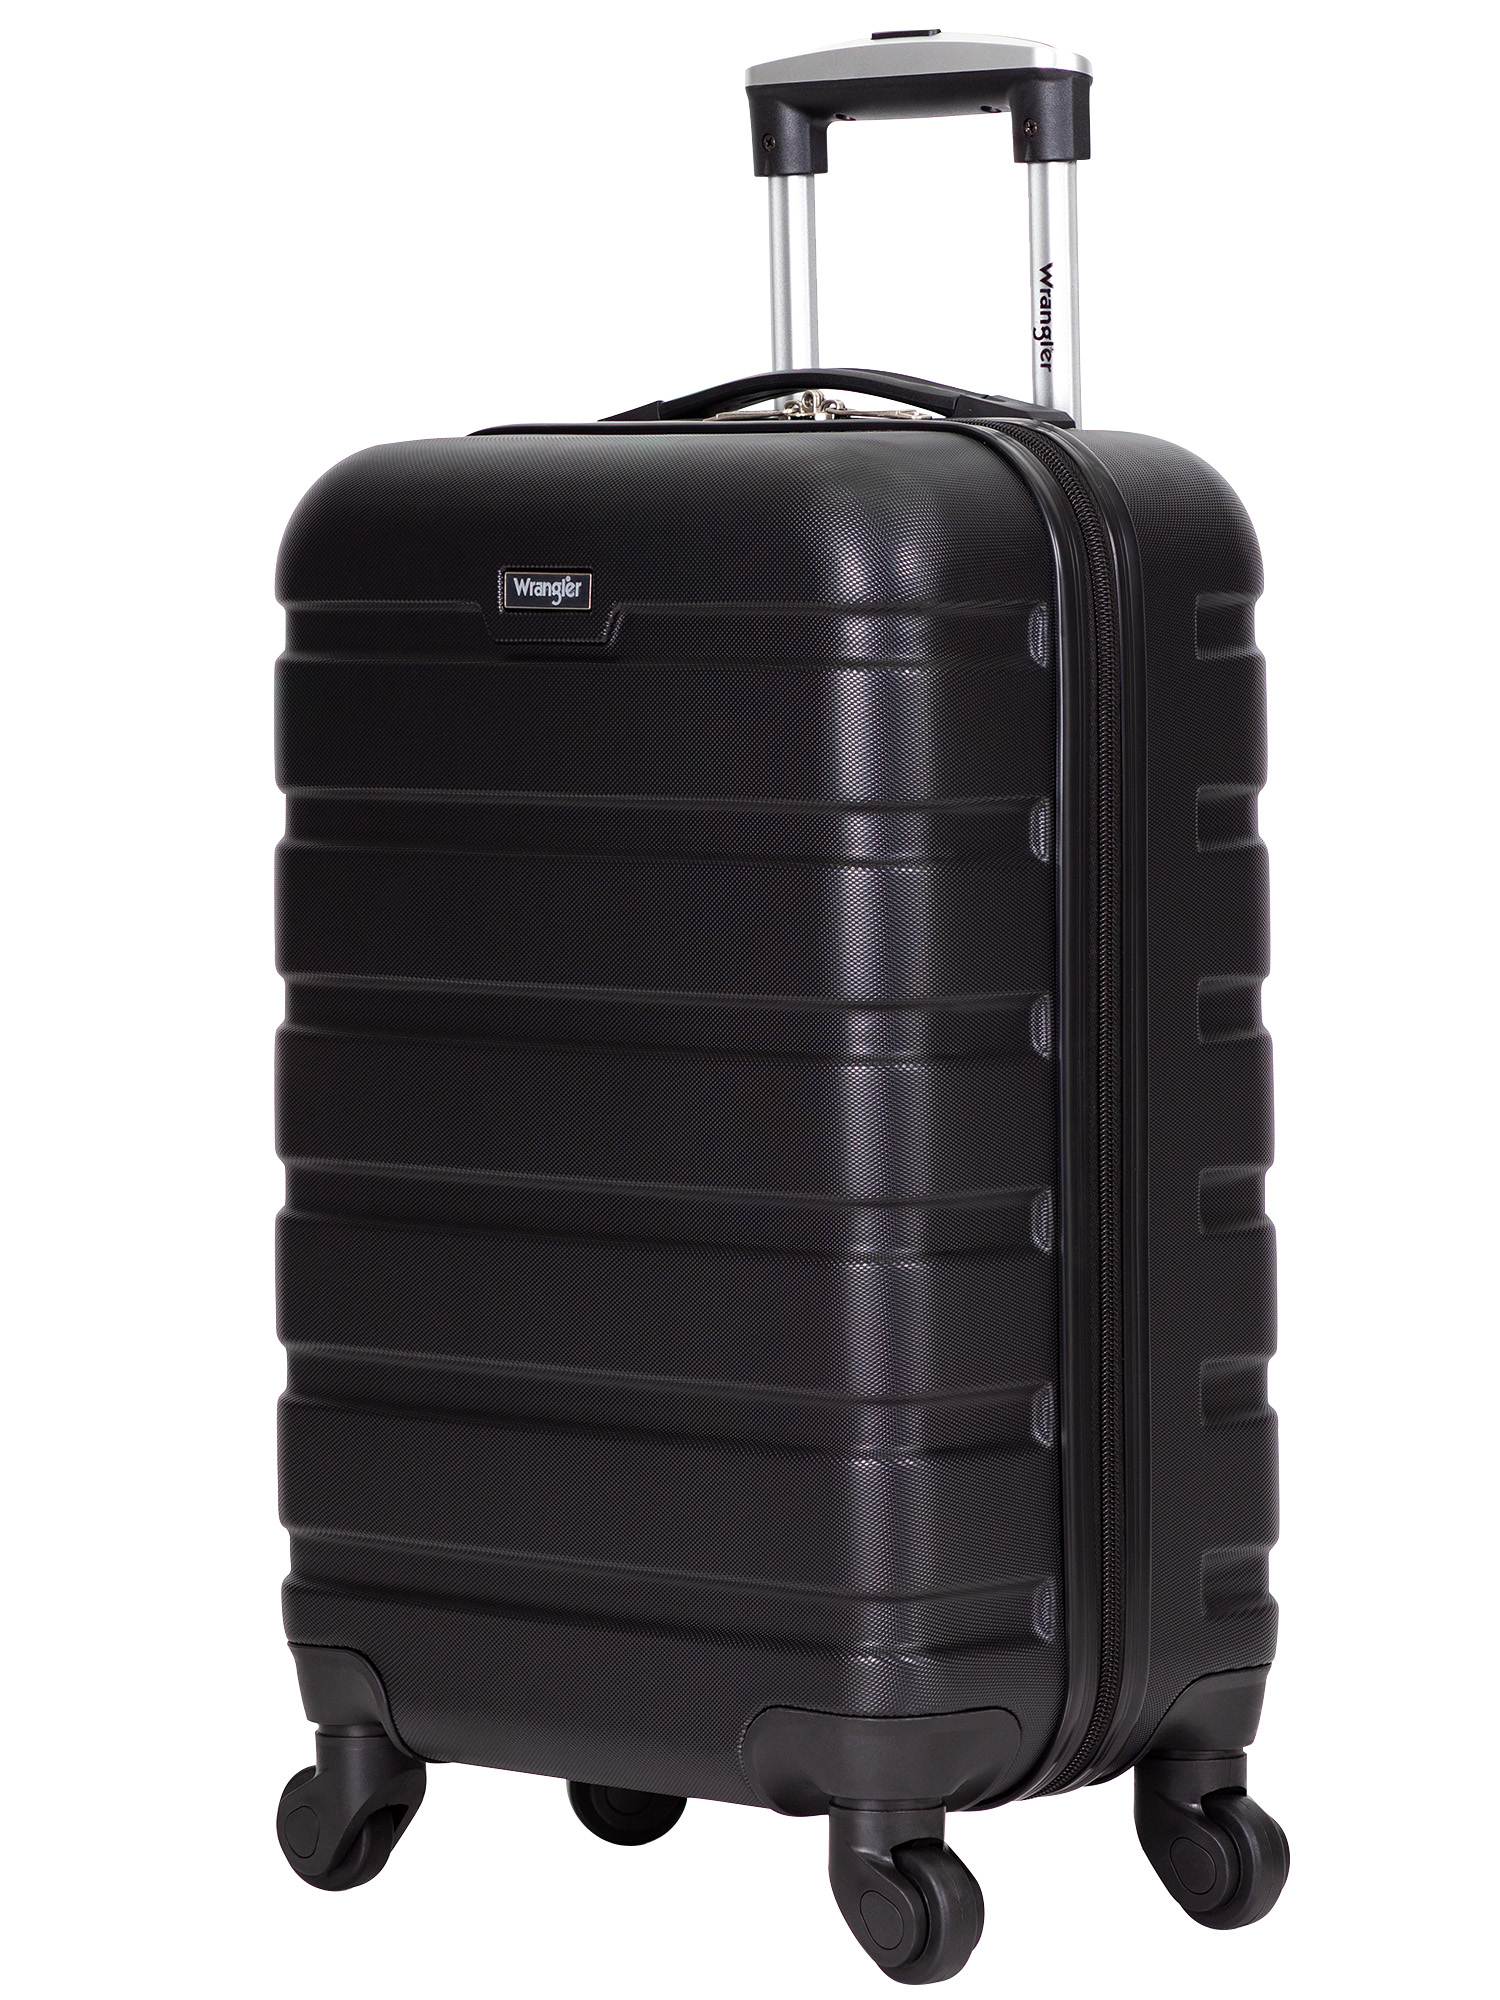 Wrangler 20” Carry-on Rolling Hardside Spinner Luggage Black - image 4 of 8